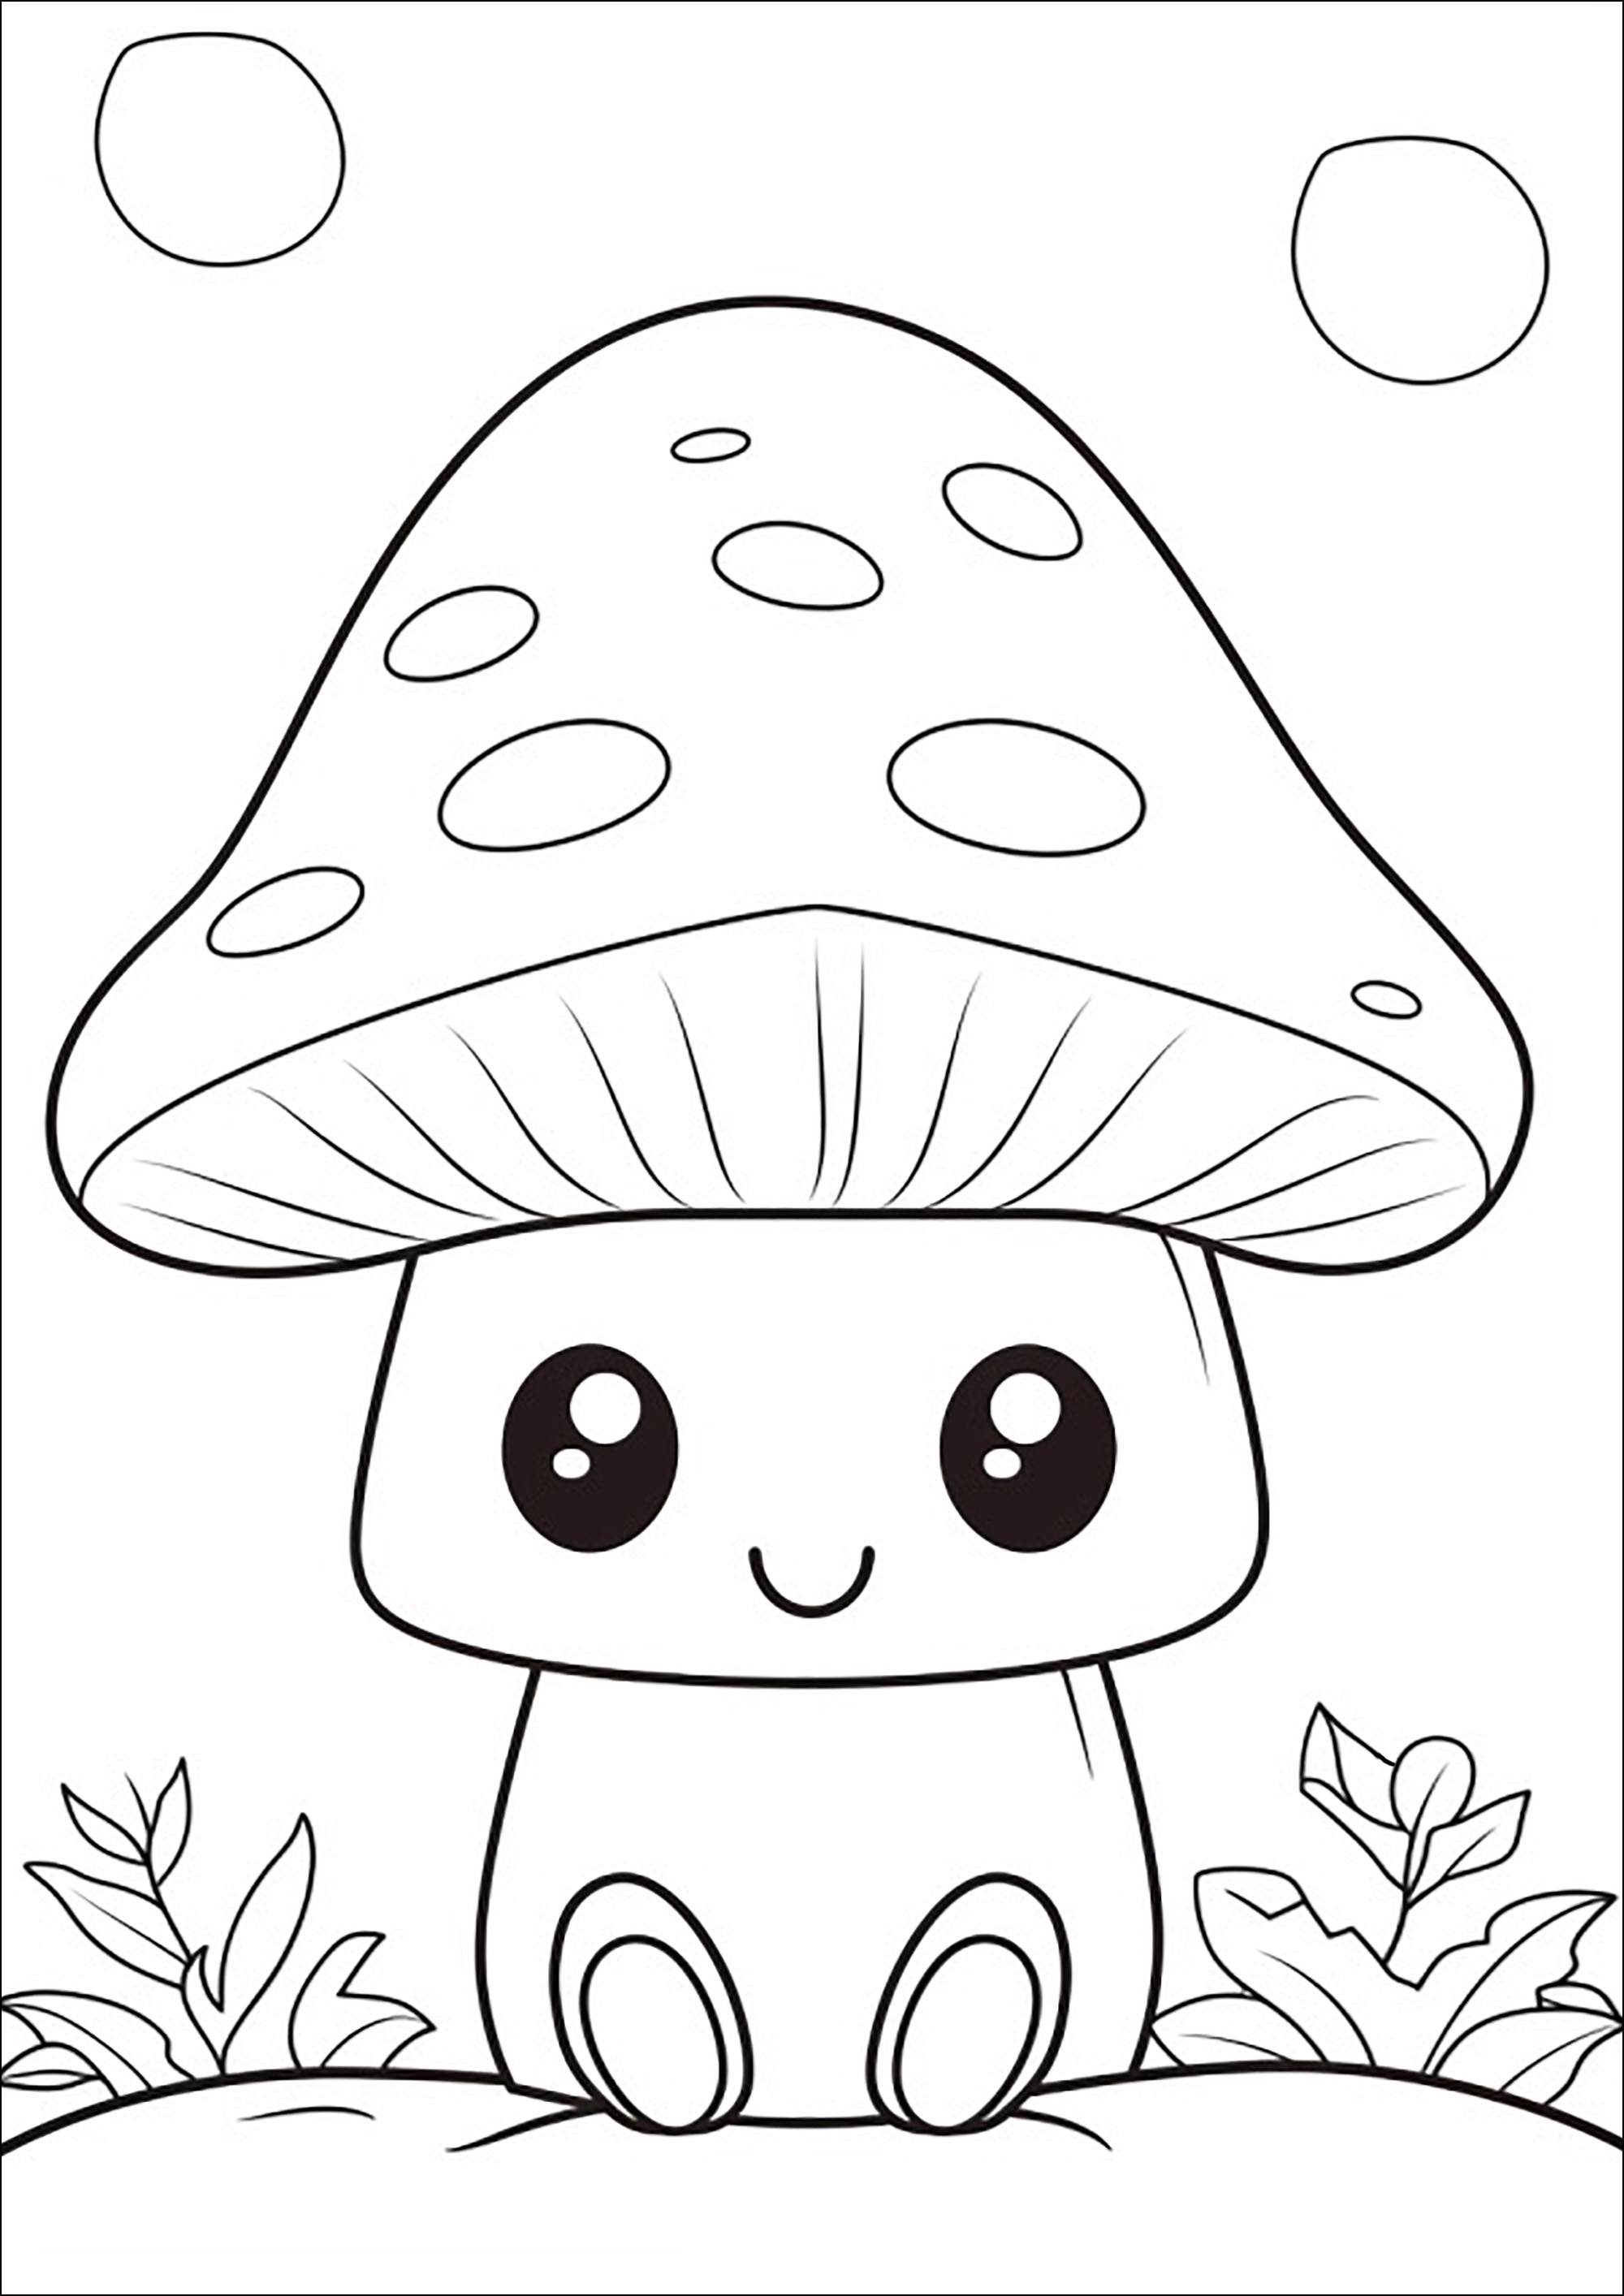 Joli champignon dessiné en style Kawaii